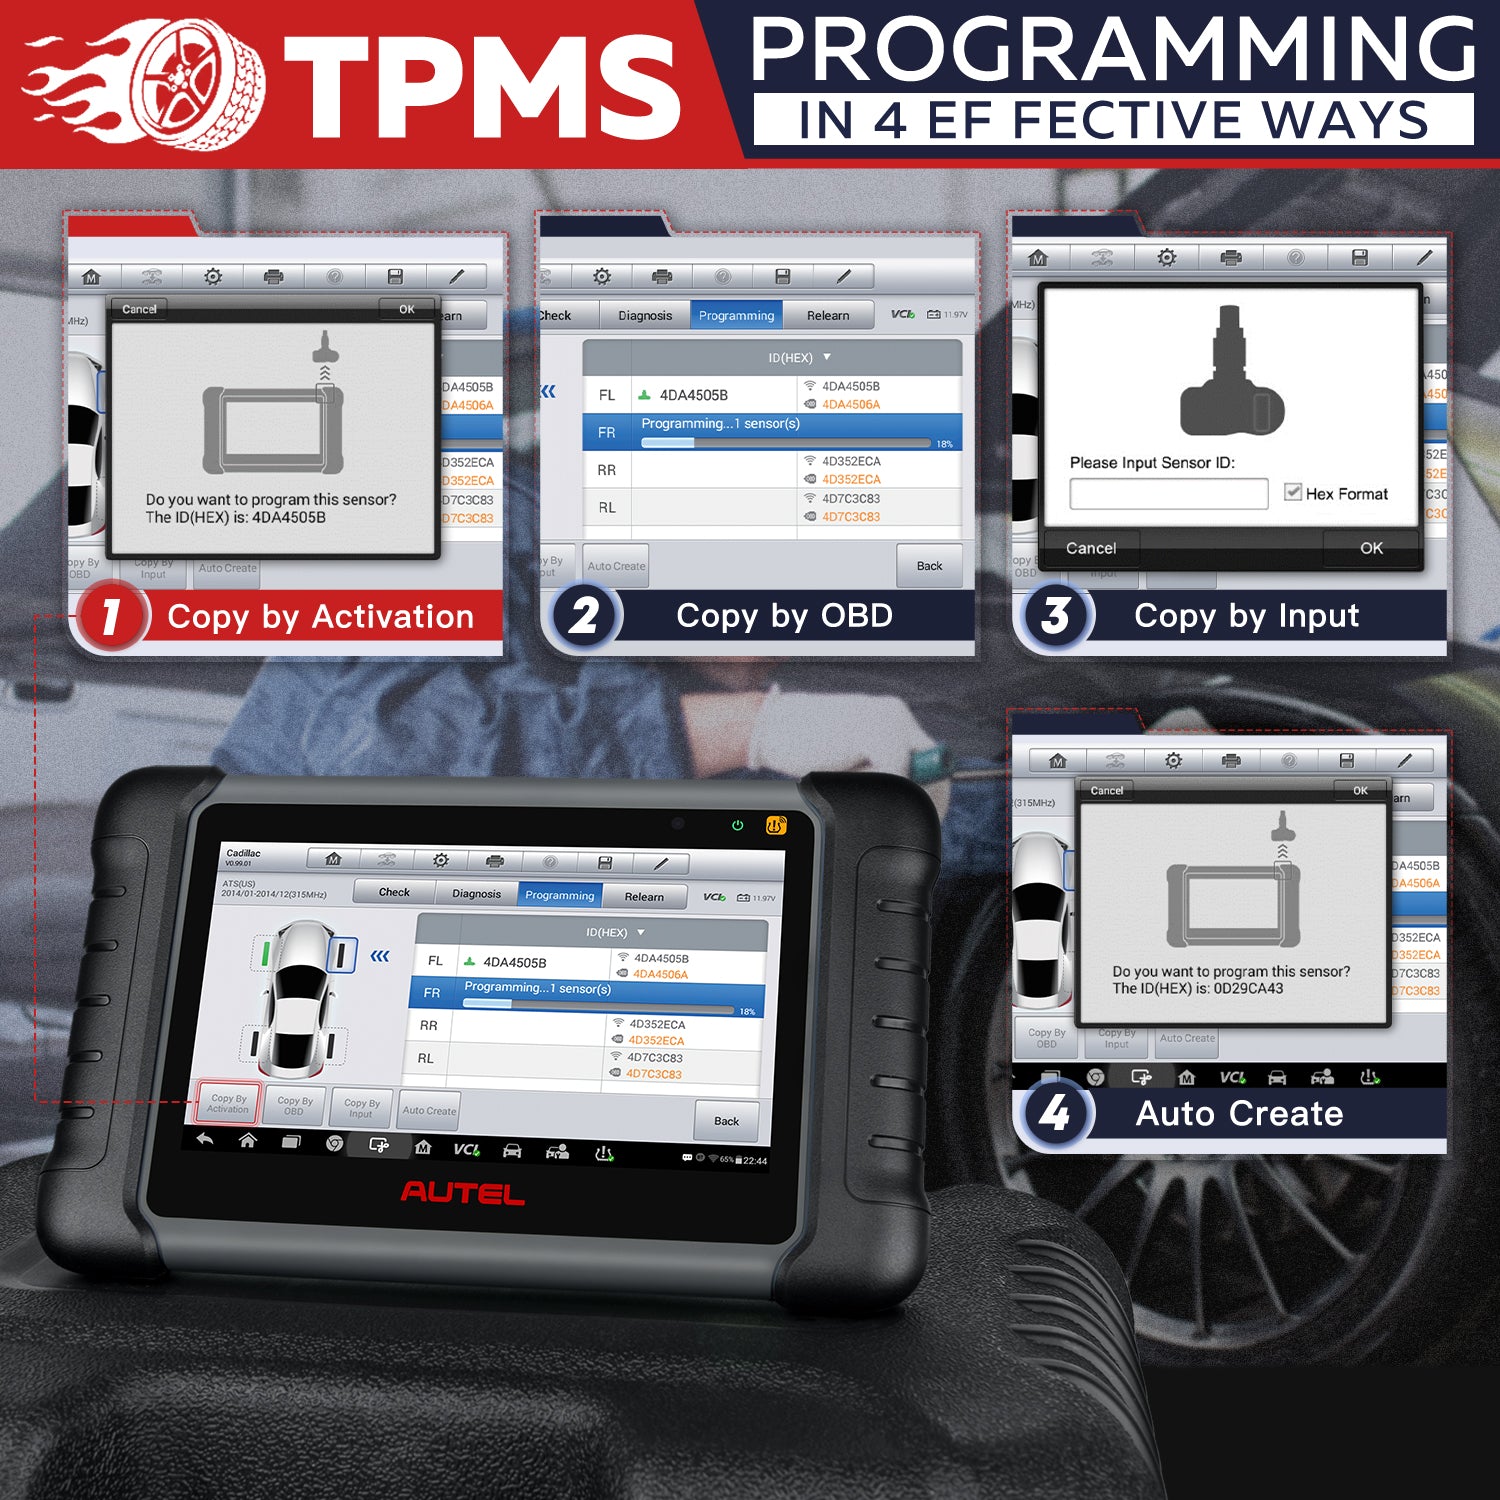 Autel MaxiTPMS PAD TPMS Sensor Programming Accessory Appareil